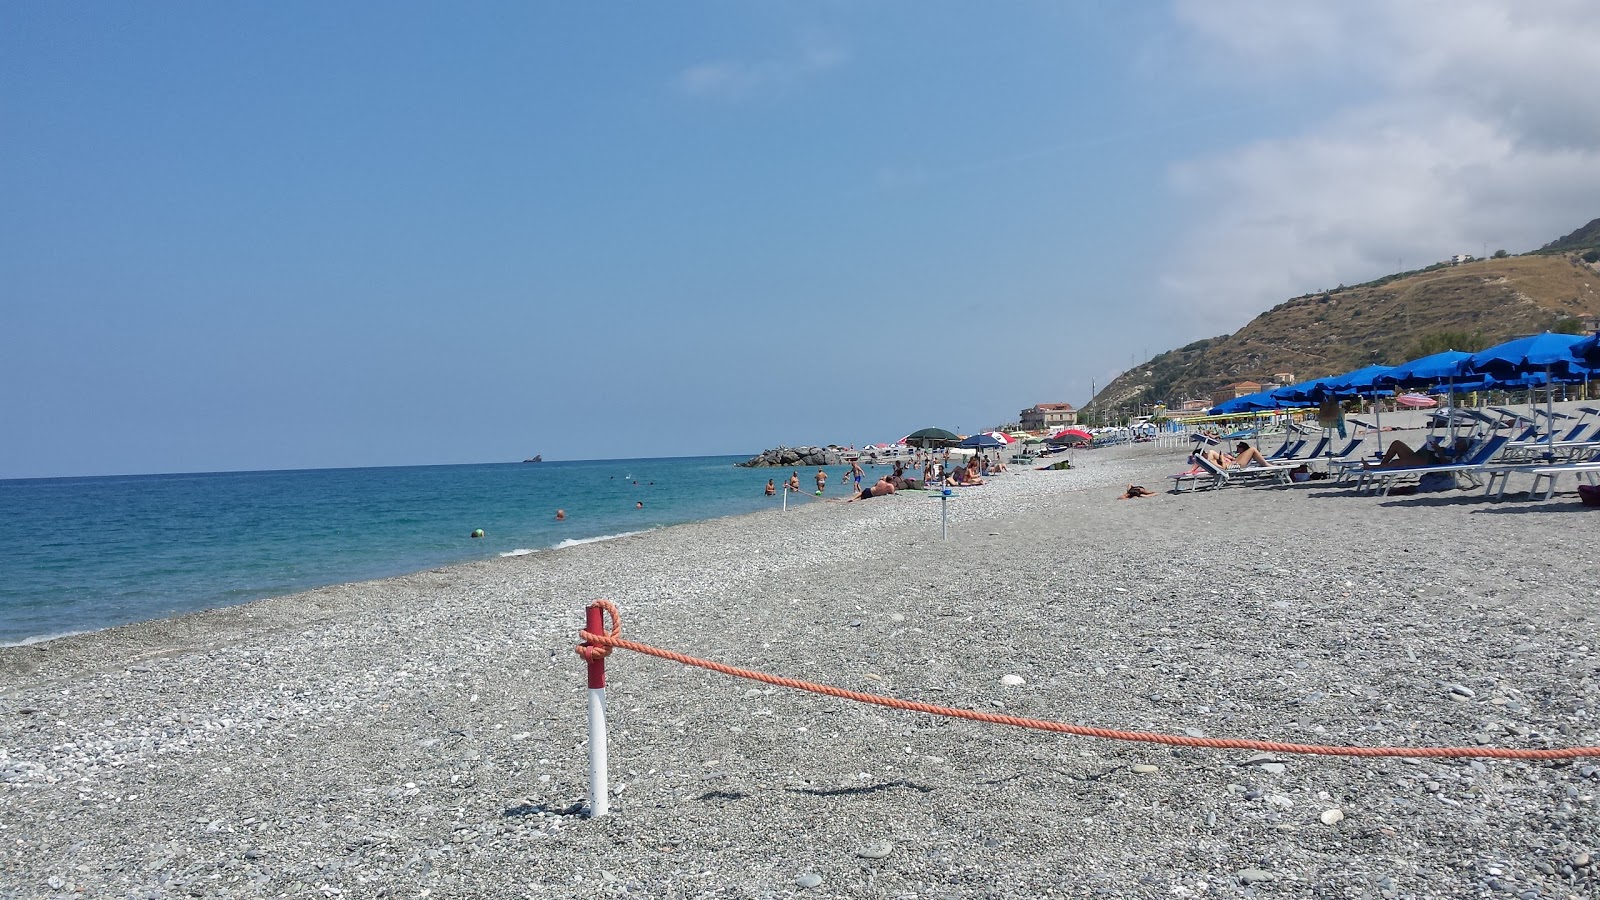 Fotografija Spiaggia Amantea z sivi fini kamenček površino